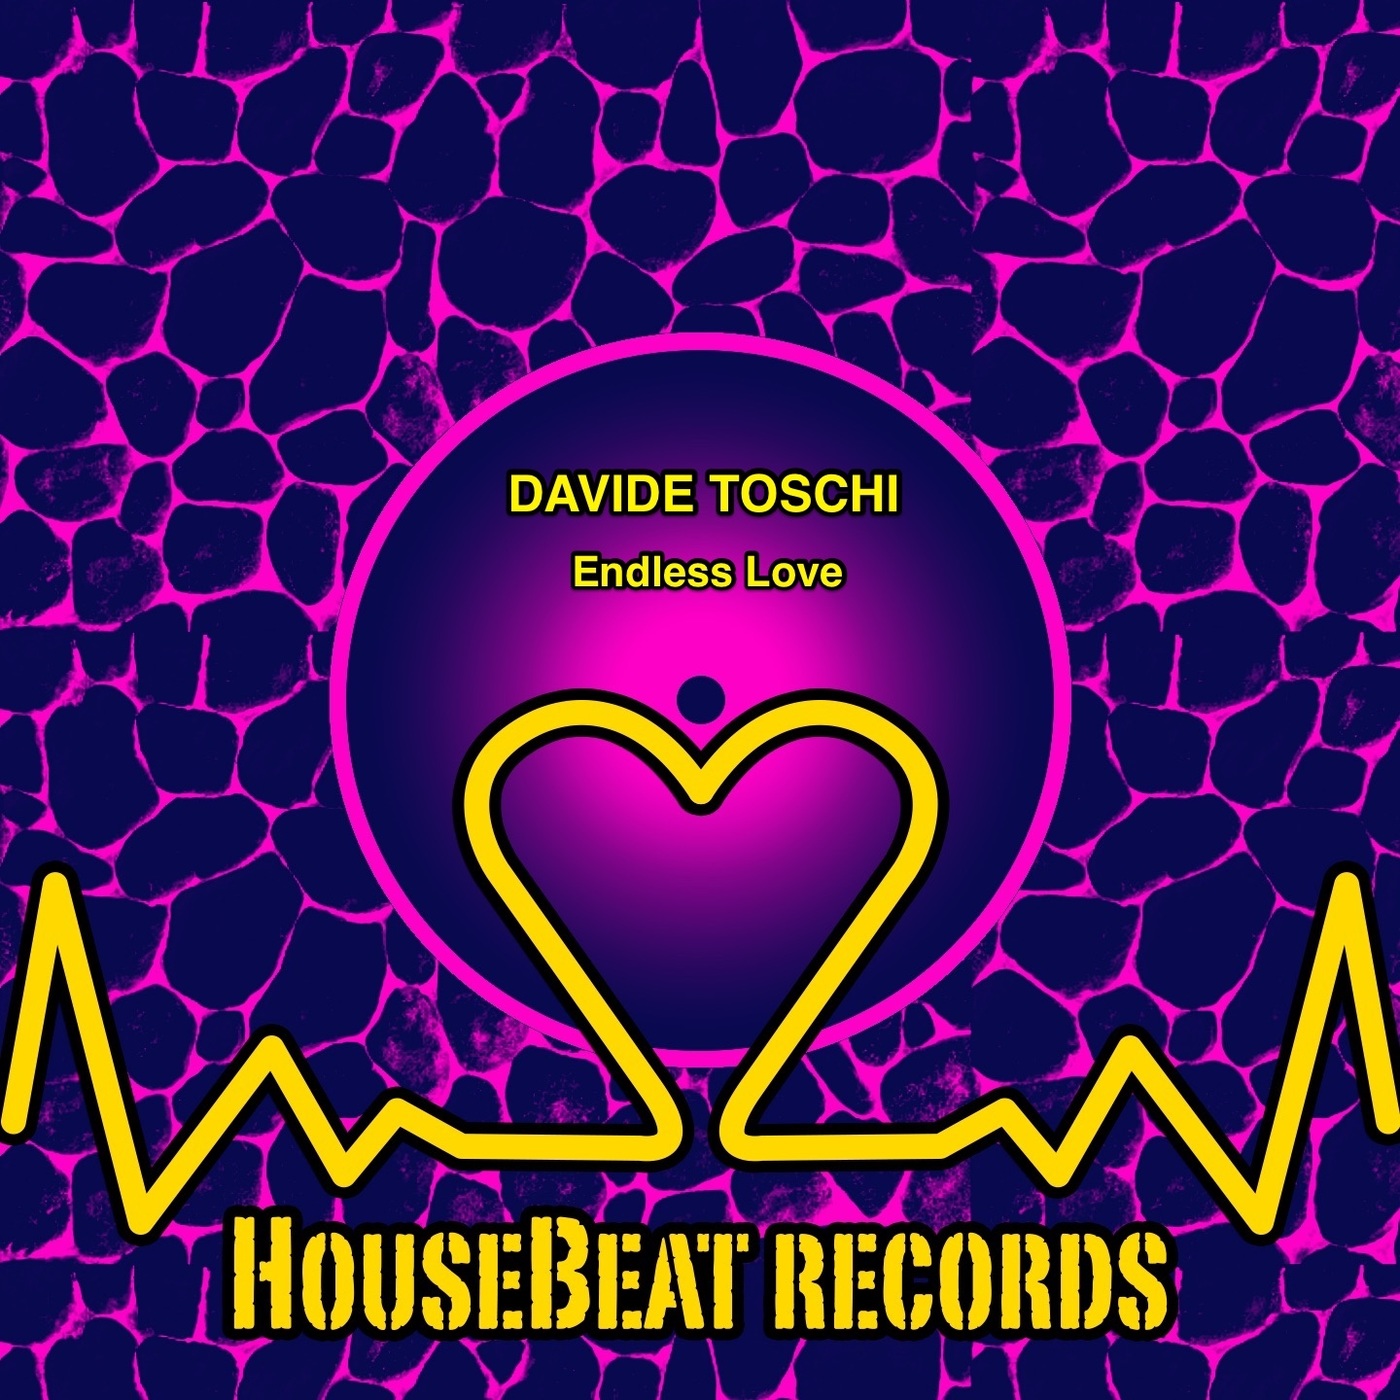 Davide Toschi - Endless Love / HouseBeat Records